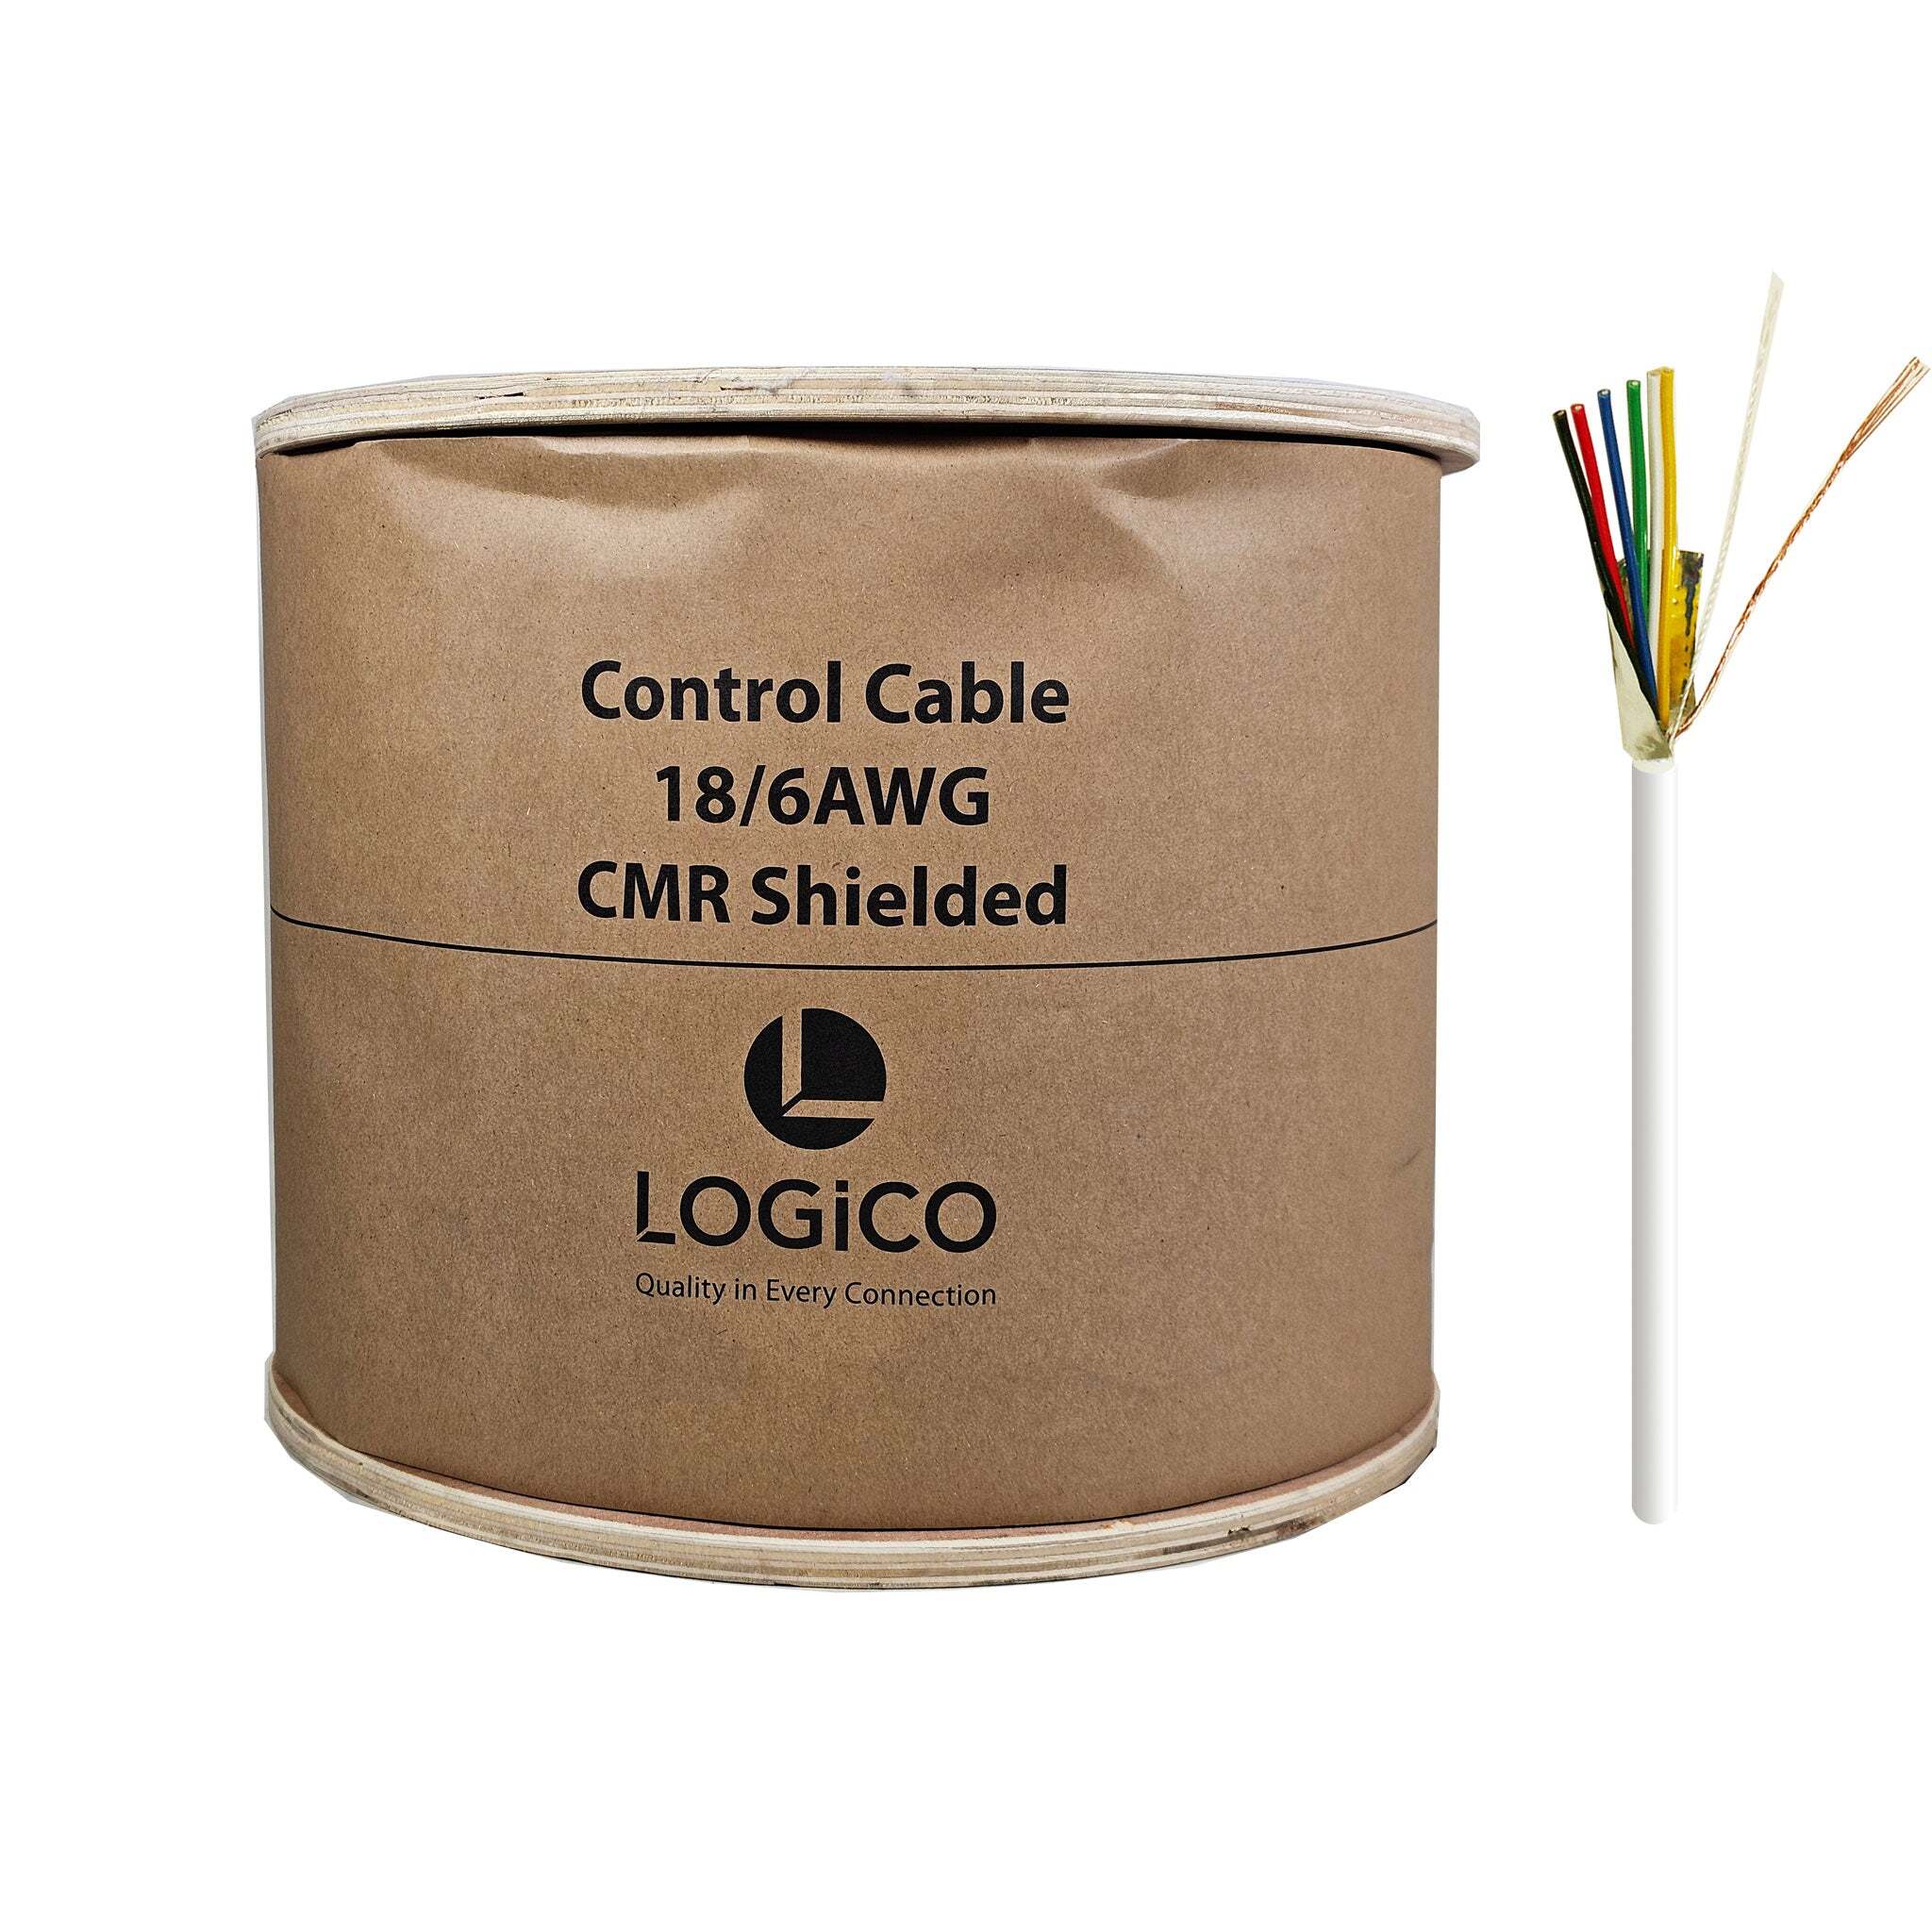 25 ft. 14-Gauge/2 Clear Stranded CU CL3R Speaker Wire